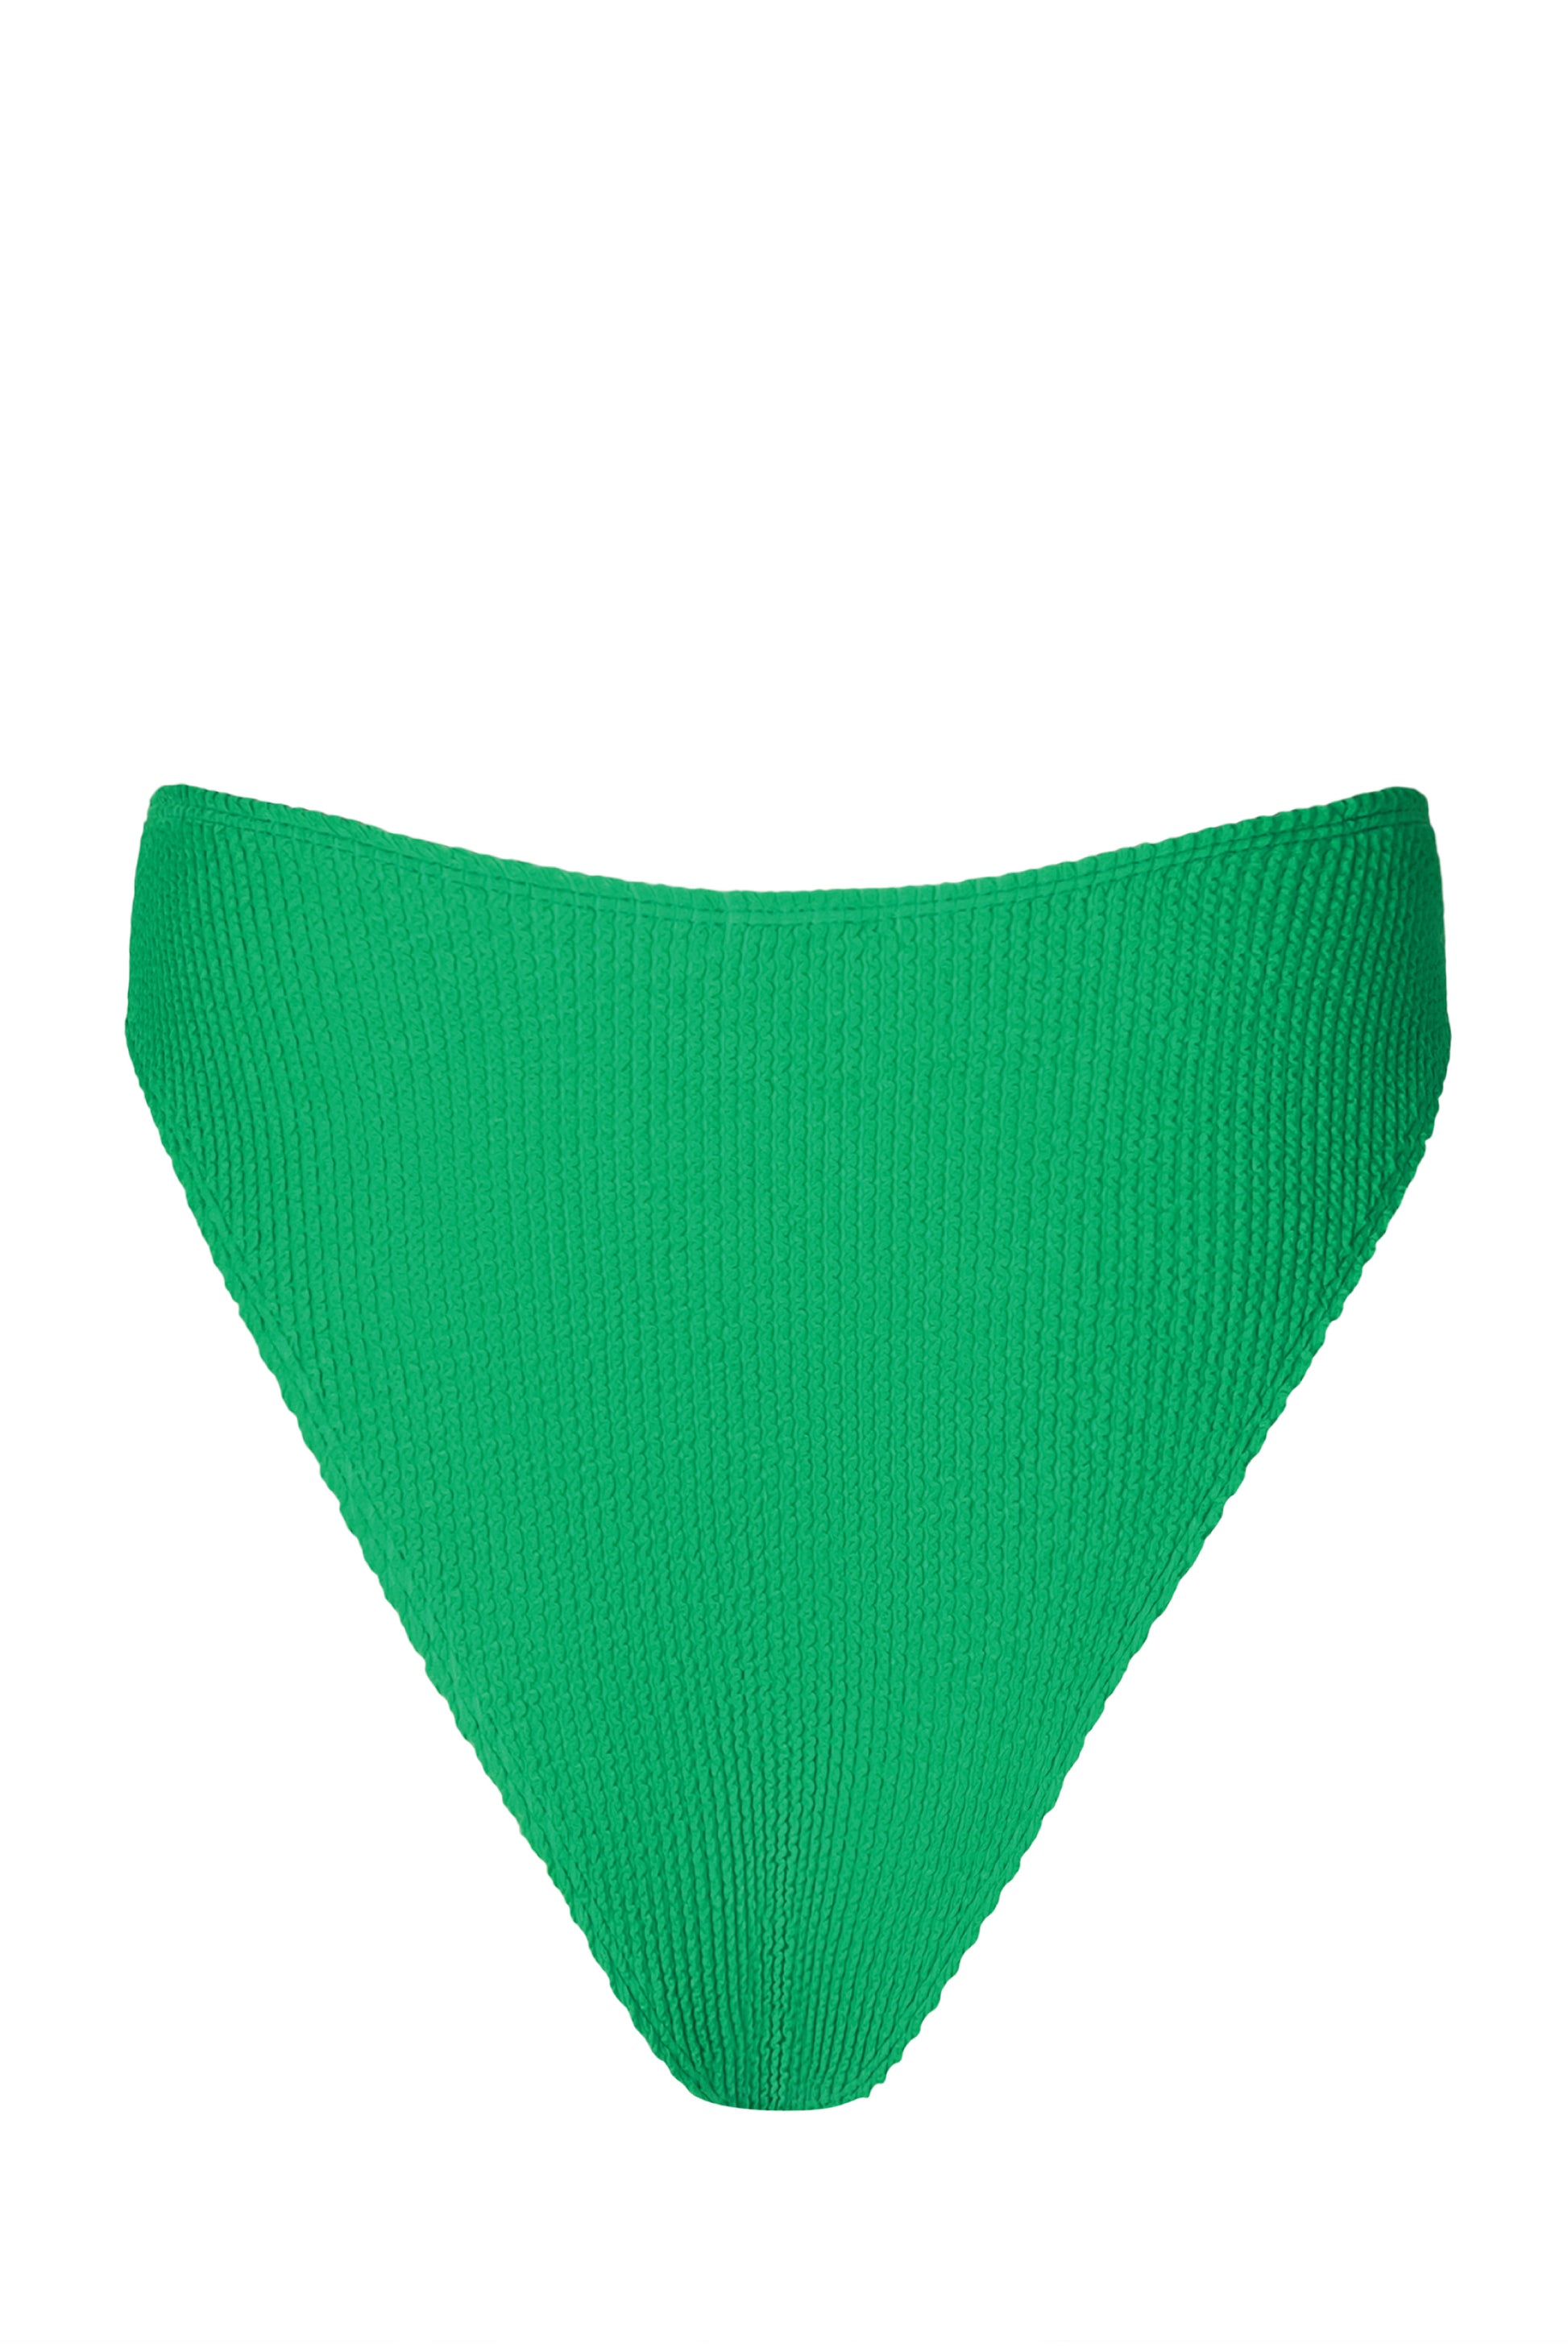 KIMMY BOTTOM - SPRING GREEN CRINKLE – vyb swim